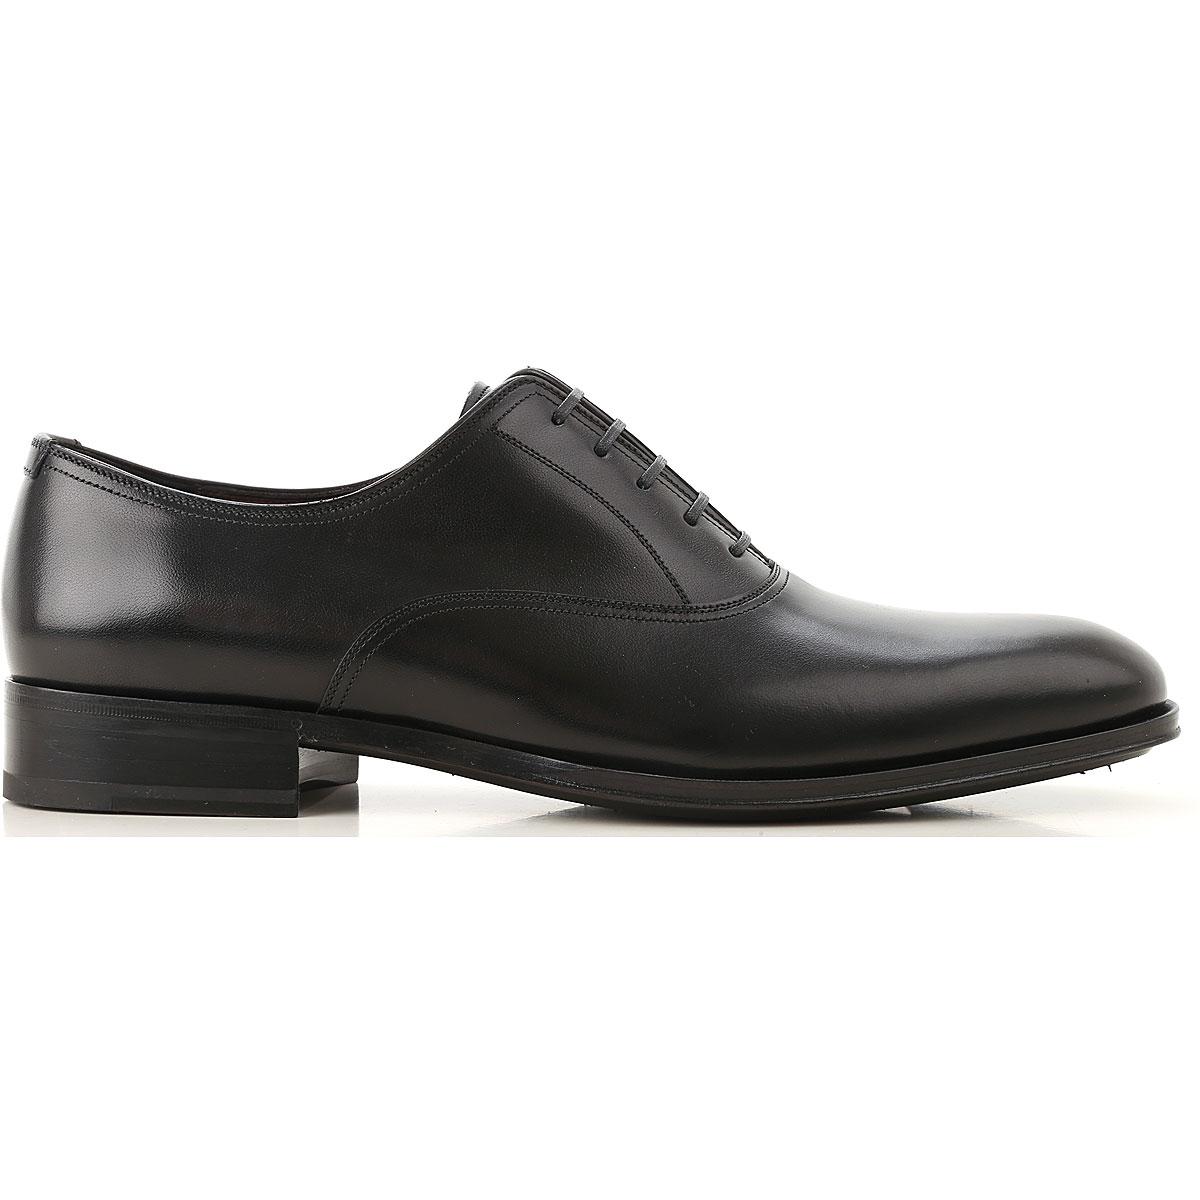 Ferragamo Lace Up Shoes For Men Oxfords in Black for Men - Lyst